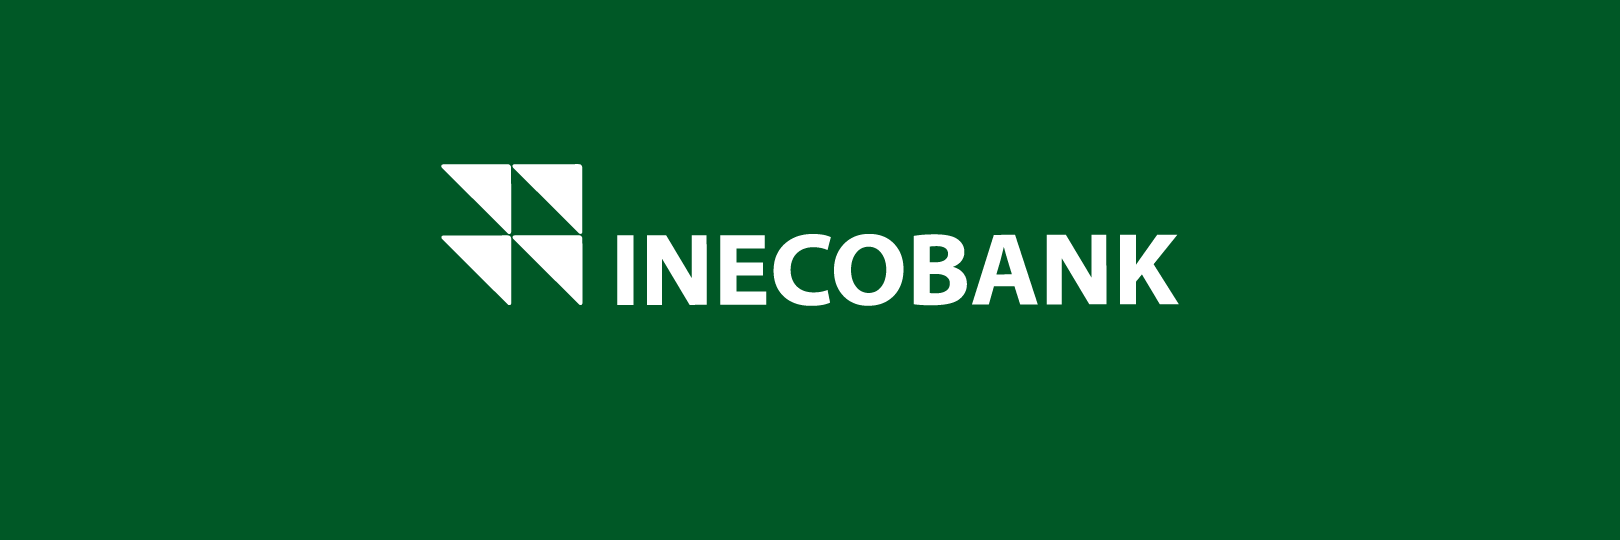 Inecobank card design by Indigo branding